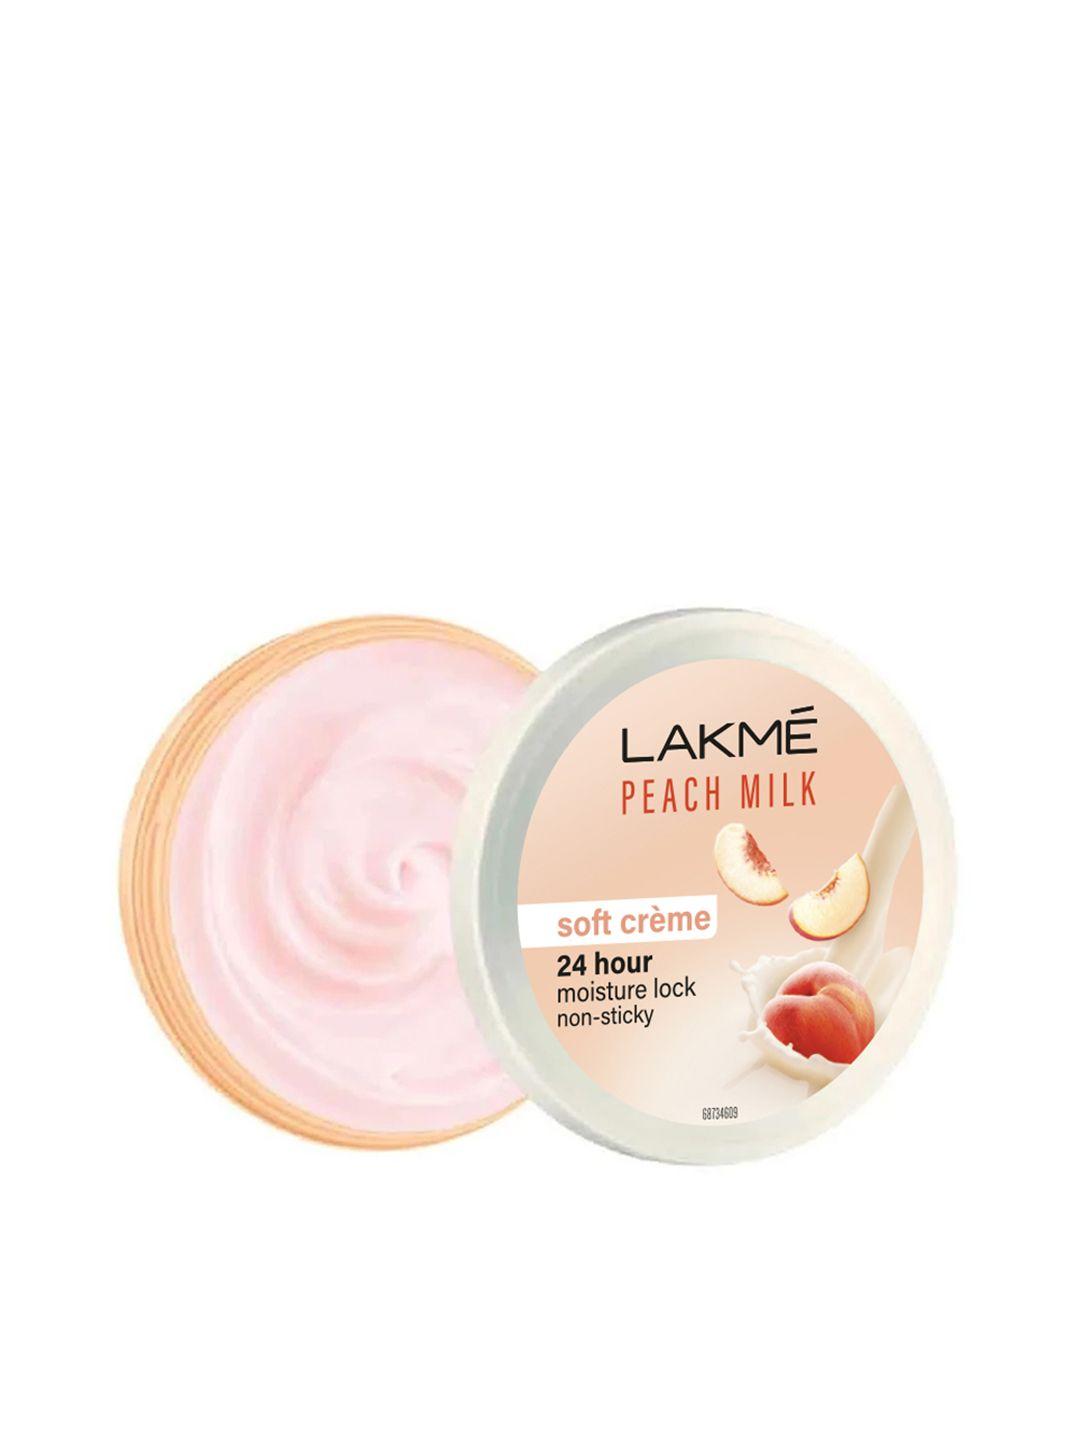 Lakme Peach Milk Soft Creme Moisturizer 250g